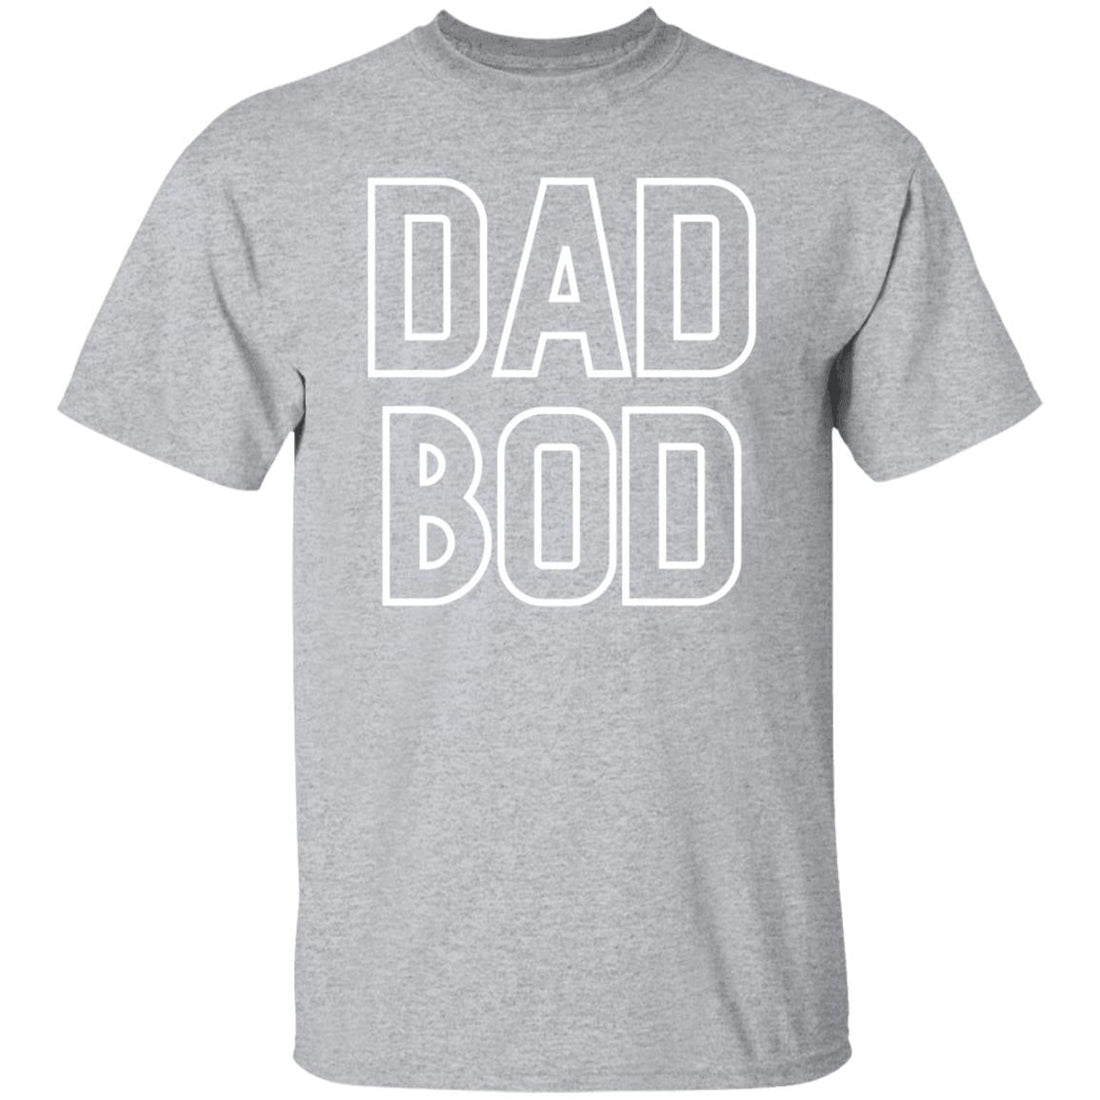 Dad Bod T-Shirt - T-Shirts - Positively Sassy - Dad Bod T-Shirt